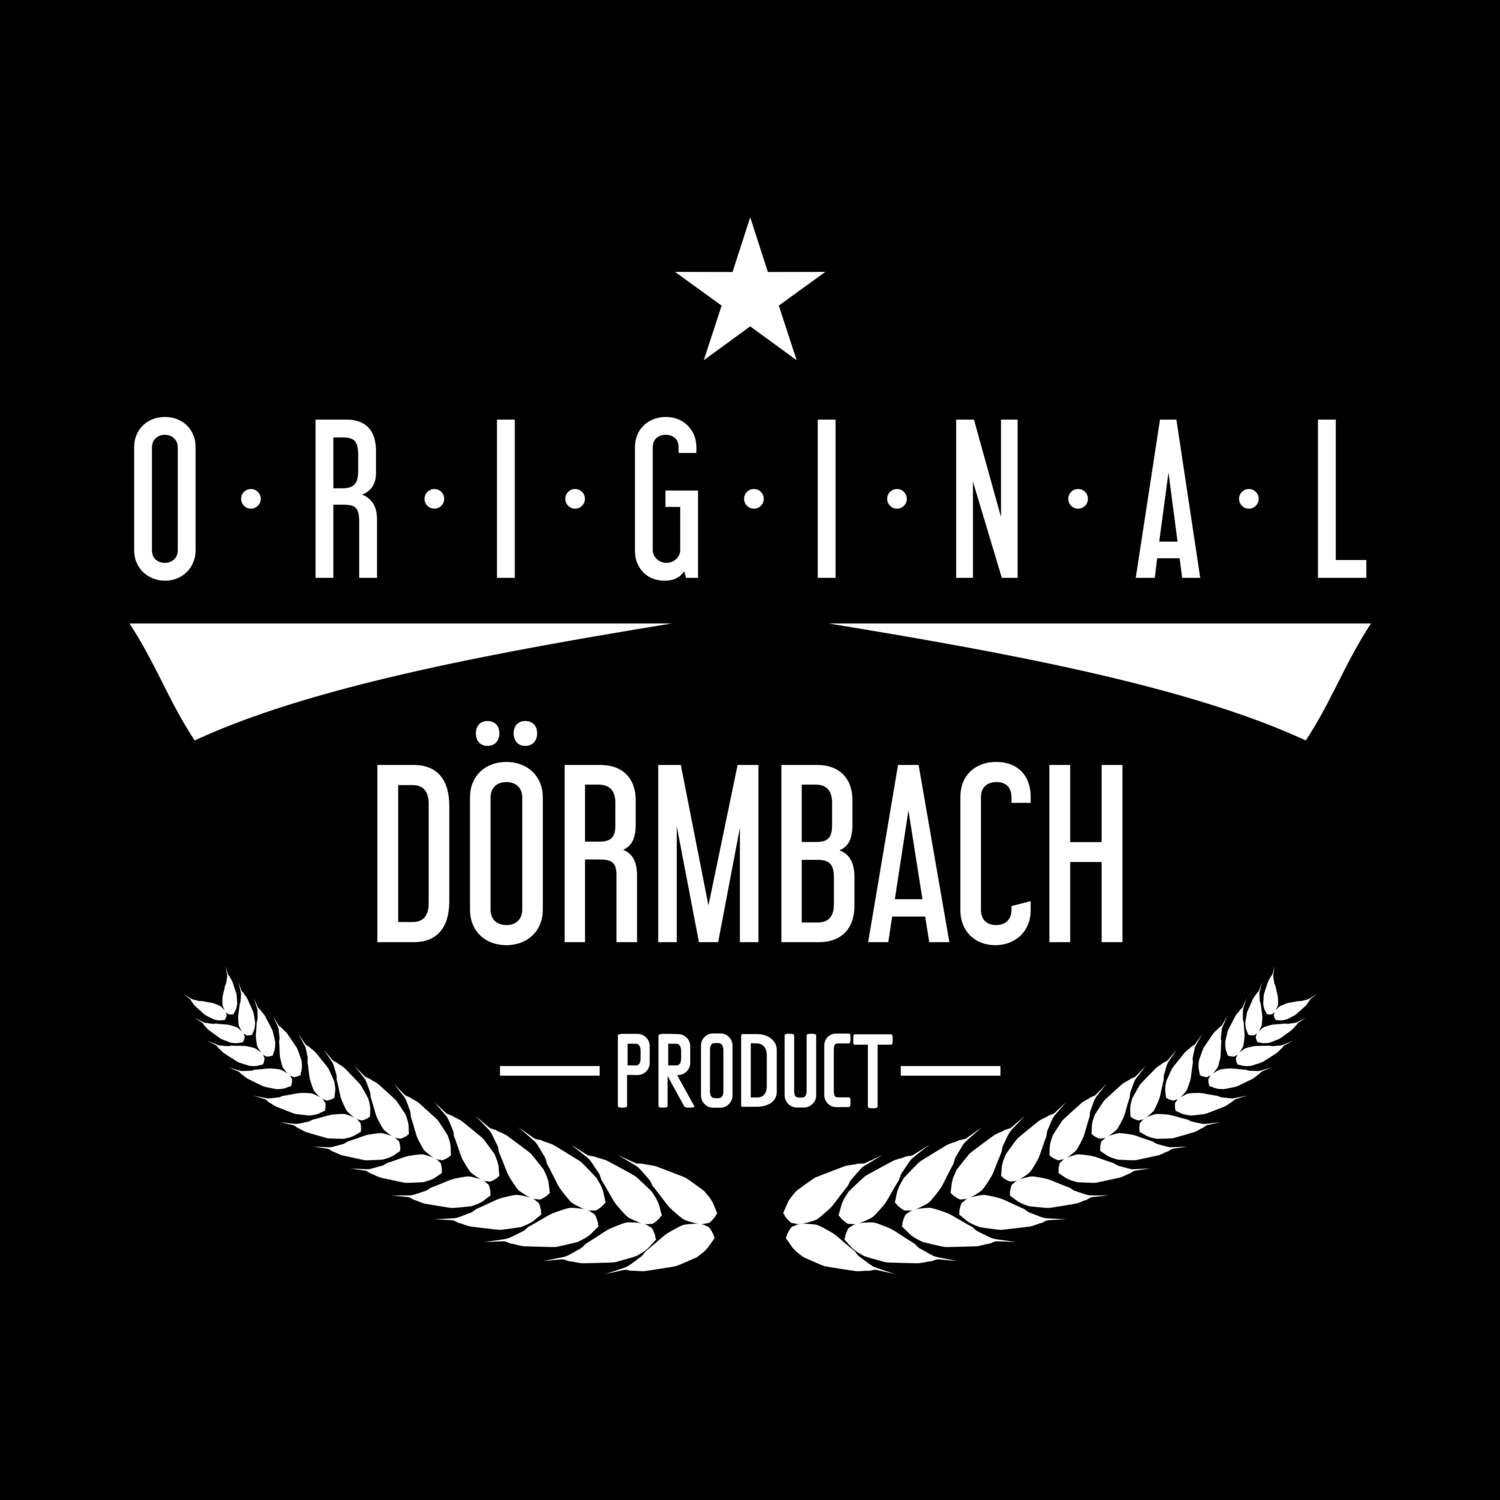 Dörmbach T-Shirt »Original Product«